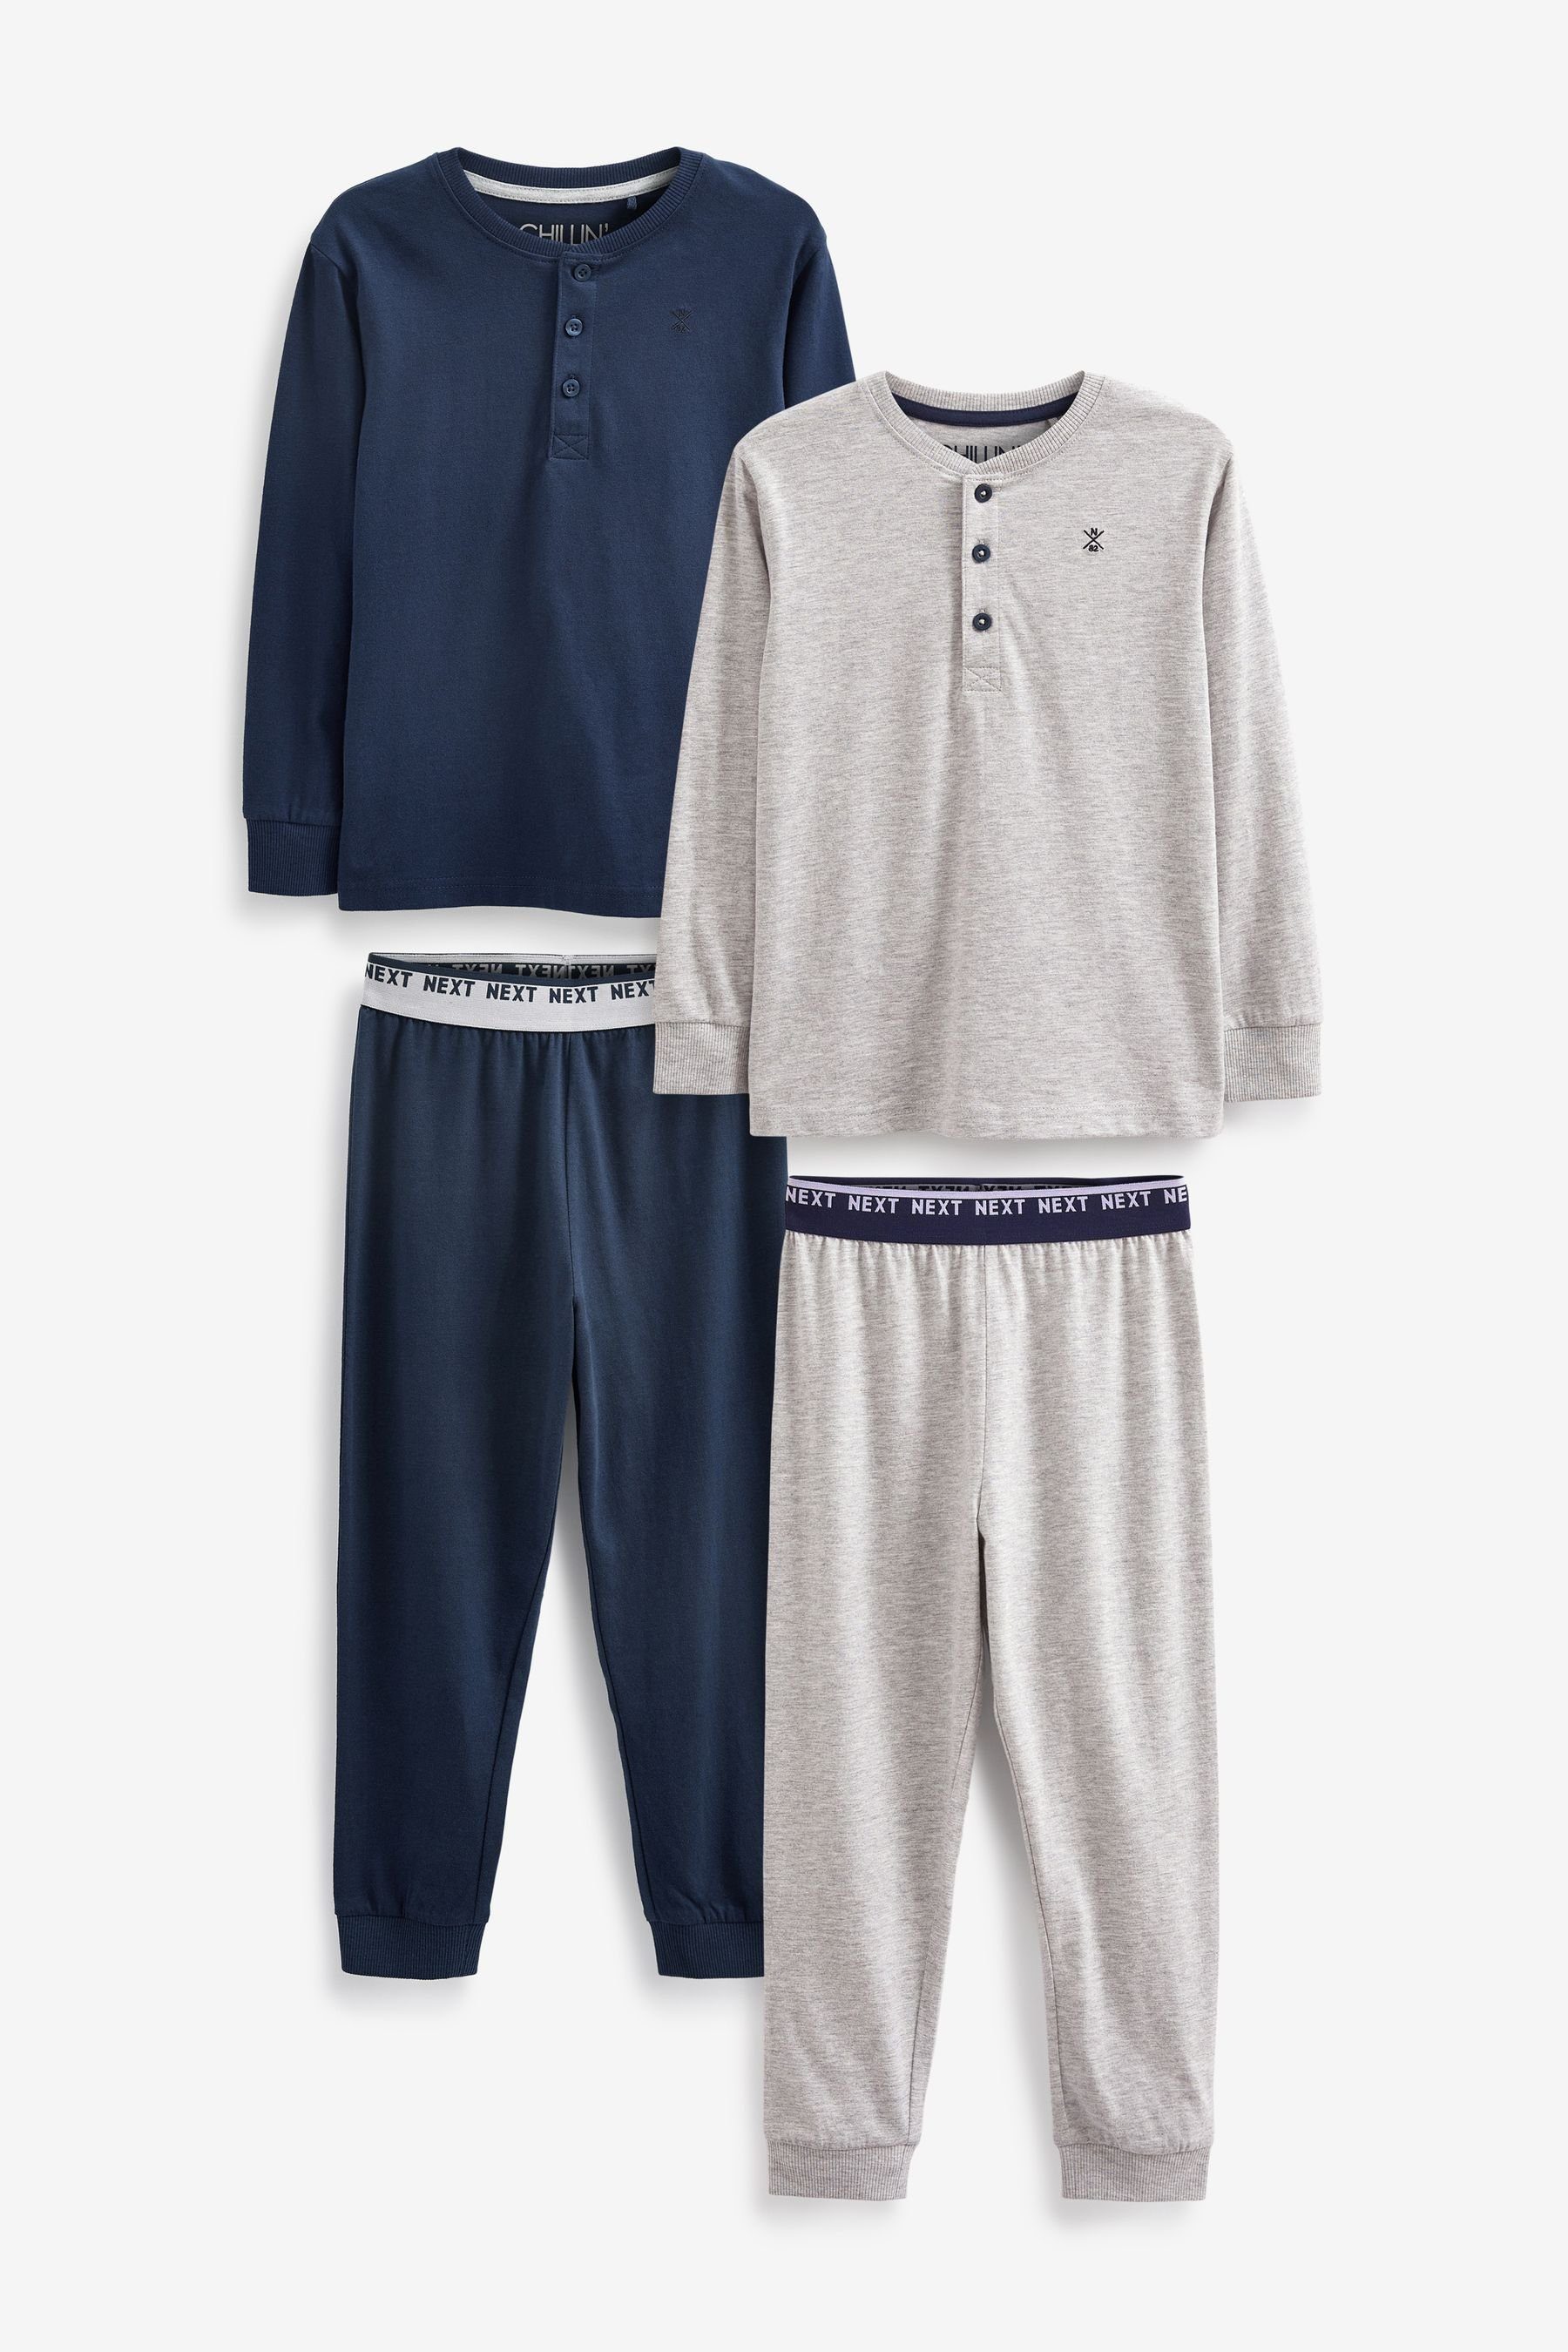 Next Pyjama Pyjamas im 2er-Pack (4 tlg) Navy Blue/Grey | Pyjamas